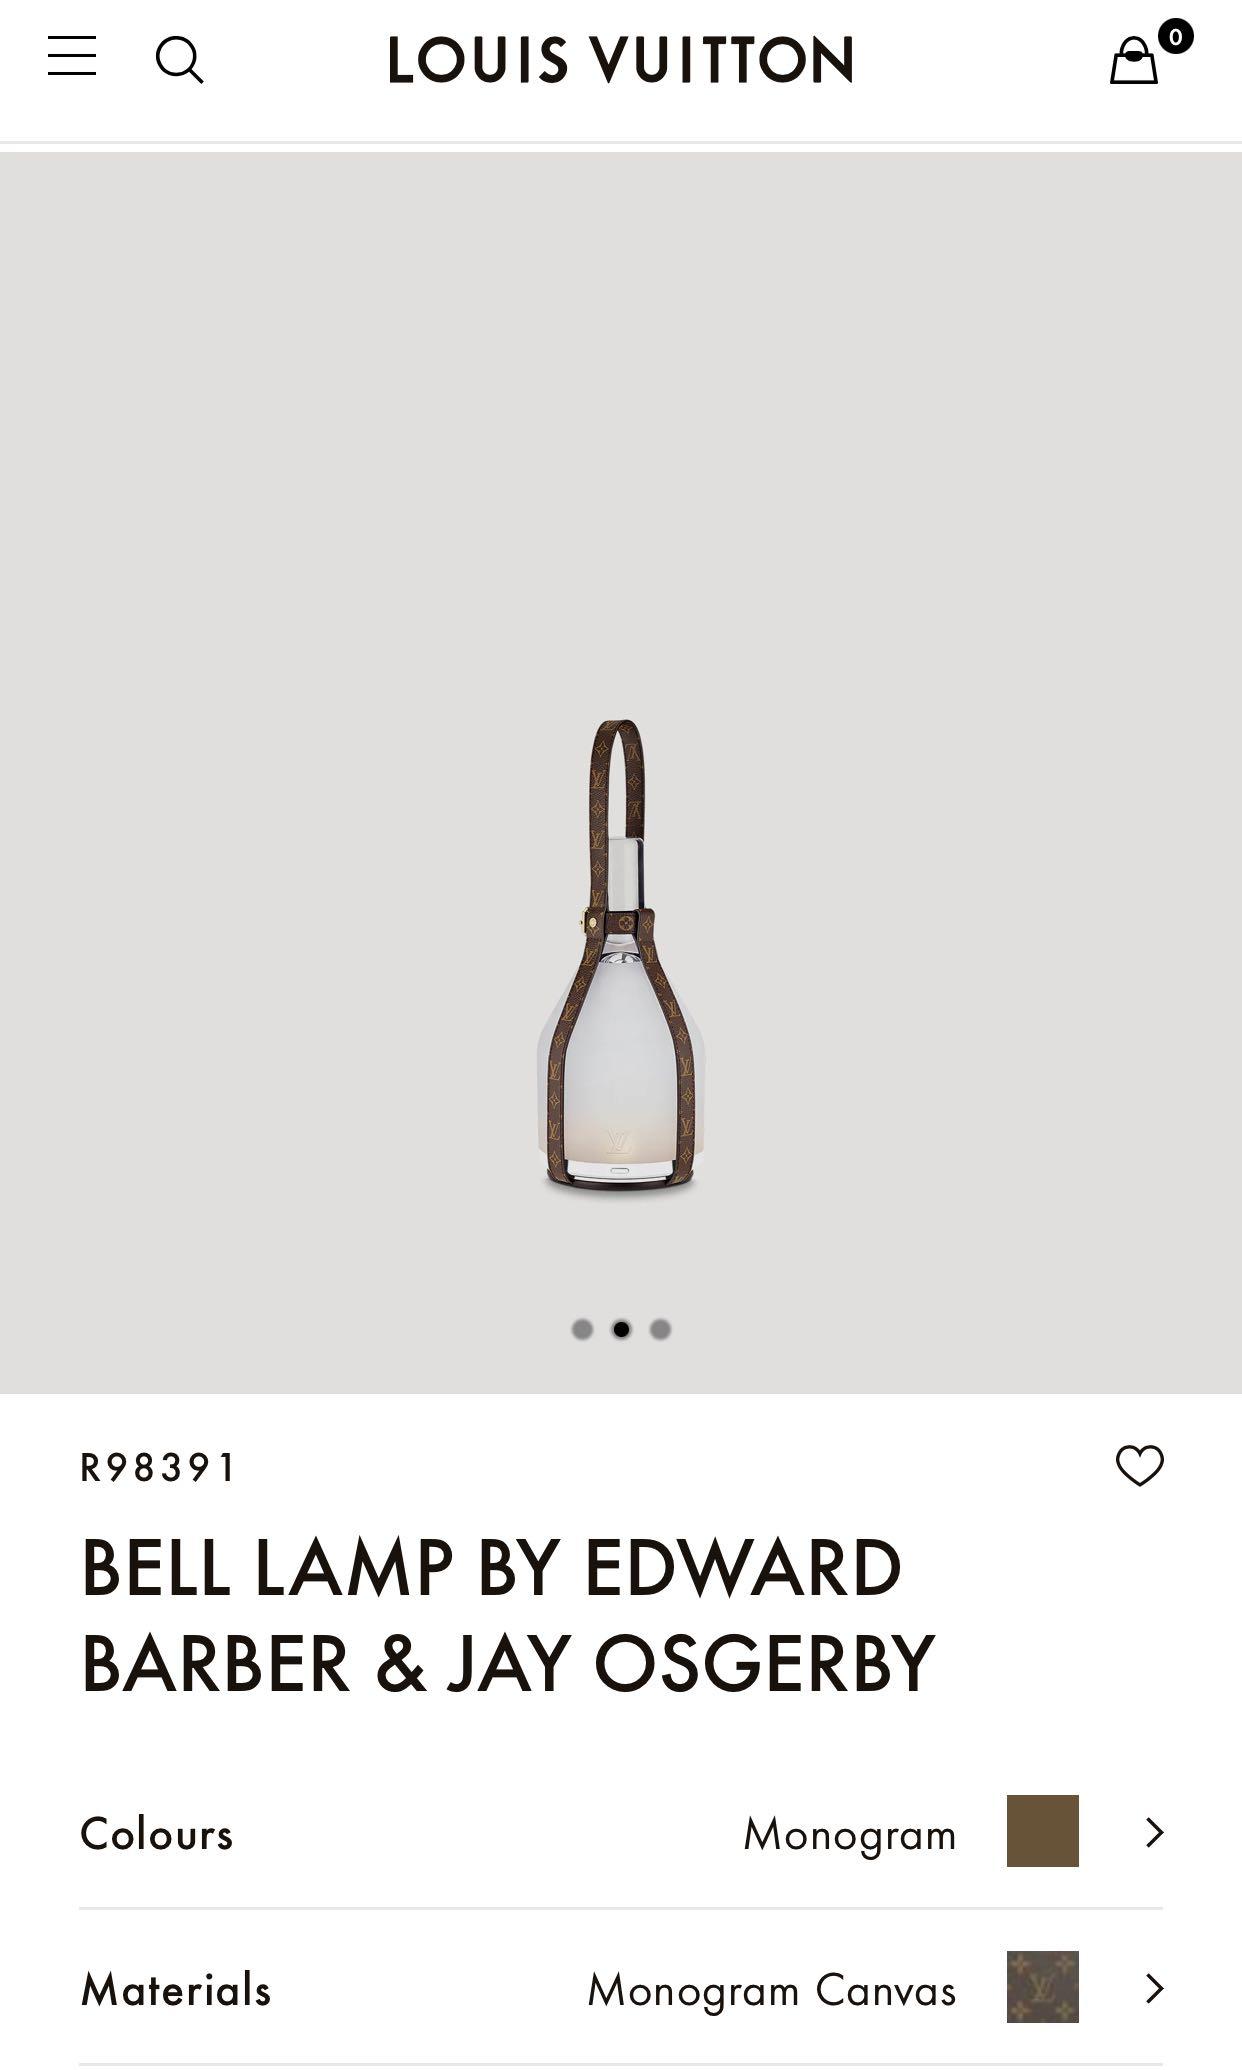 LOUIS VUITTON BELL LAMP BY EDWARD BARBER & JAY OSGERBY, Luxury